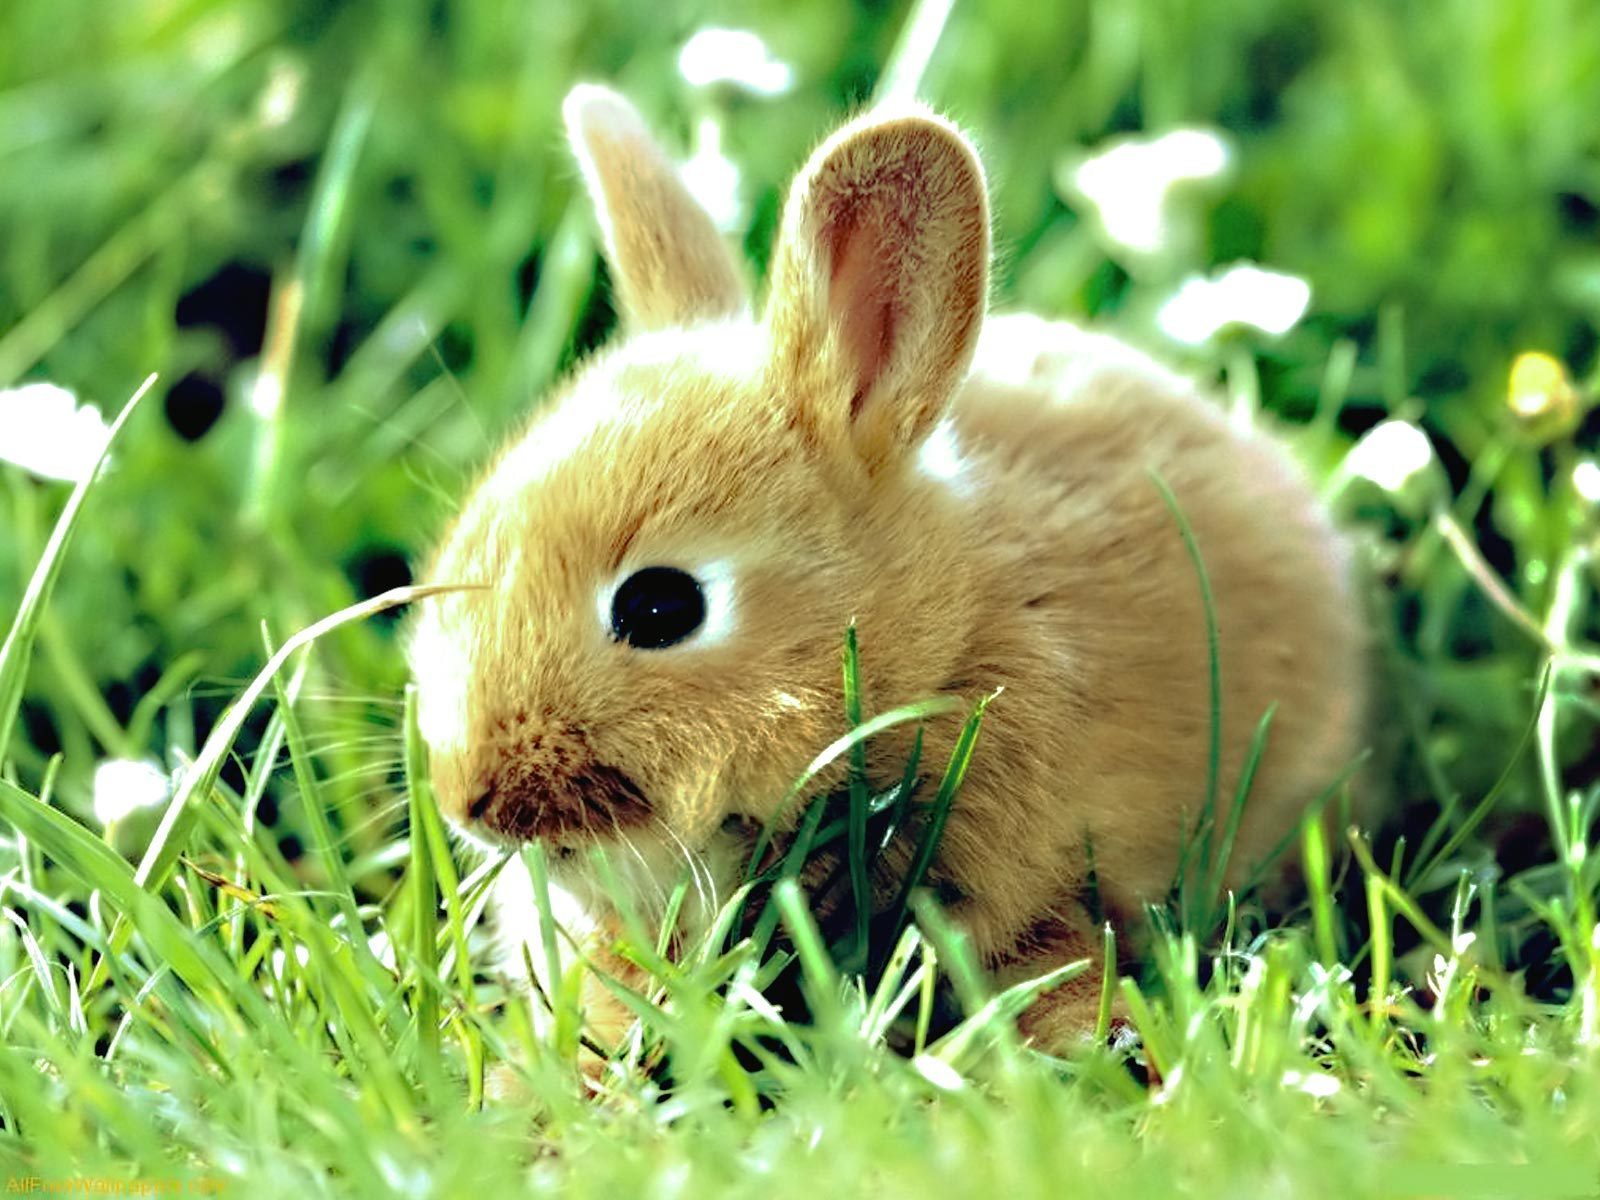 baby-bunnies-baby-bunnies-photo-19896668-fanpop